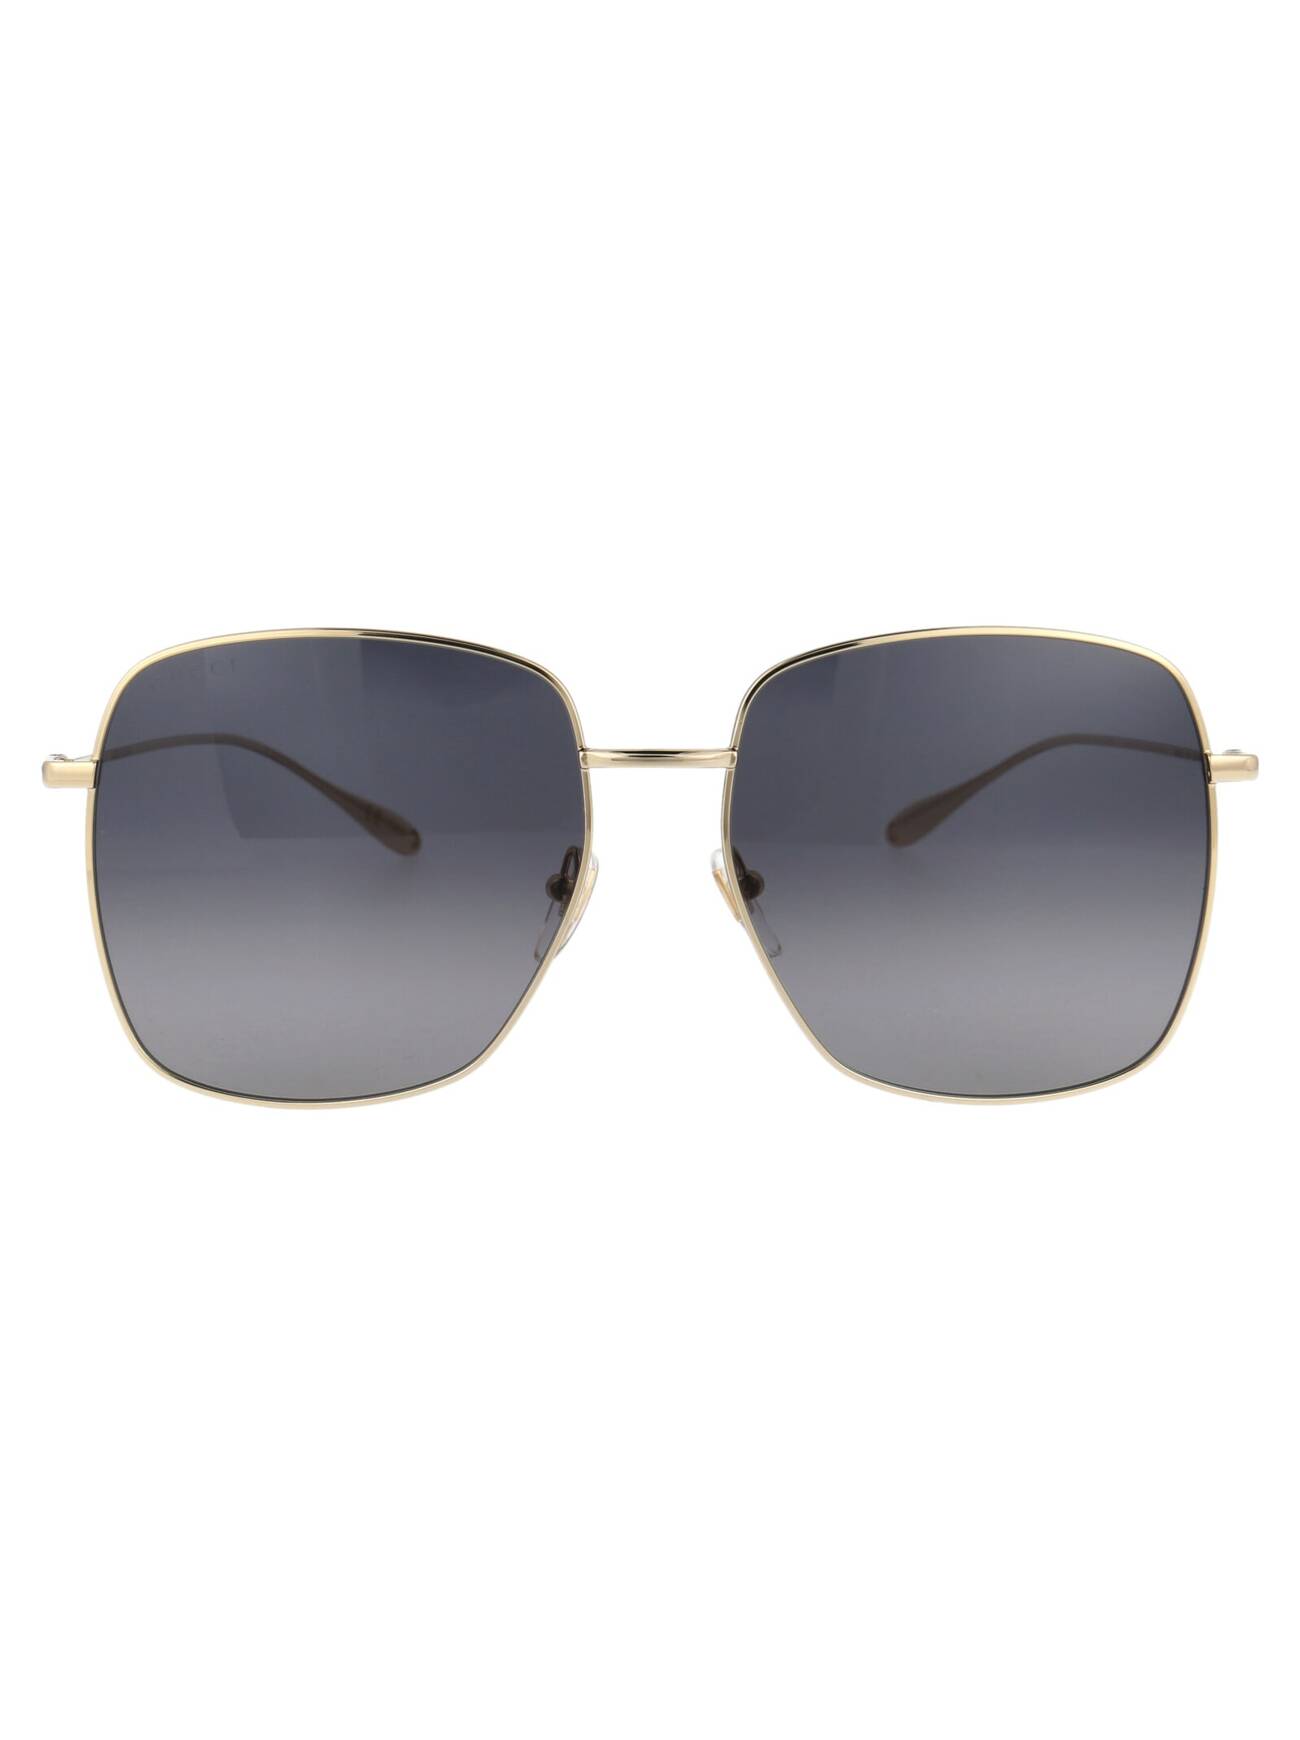 Gucci Eyewear Gg1031s Sunglasses in gold / grey